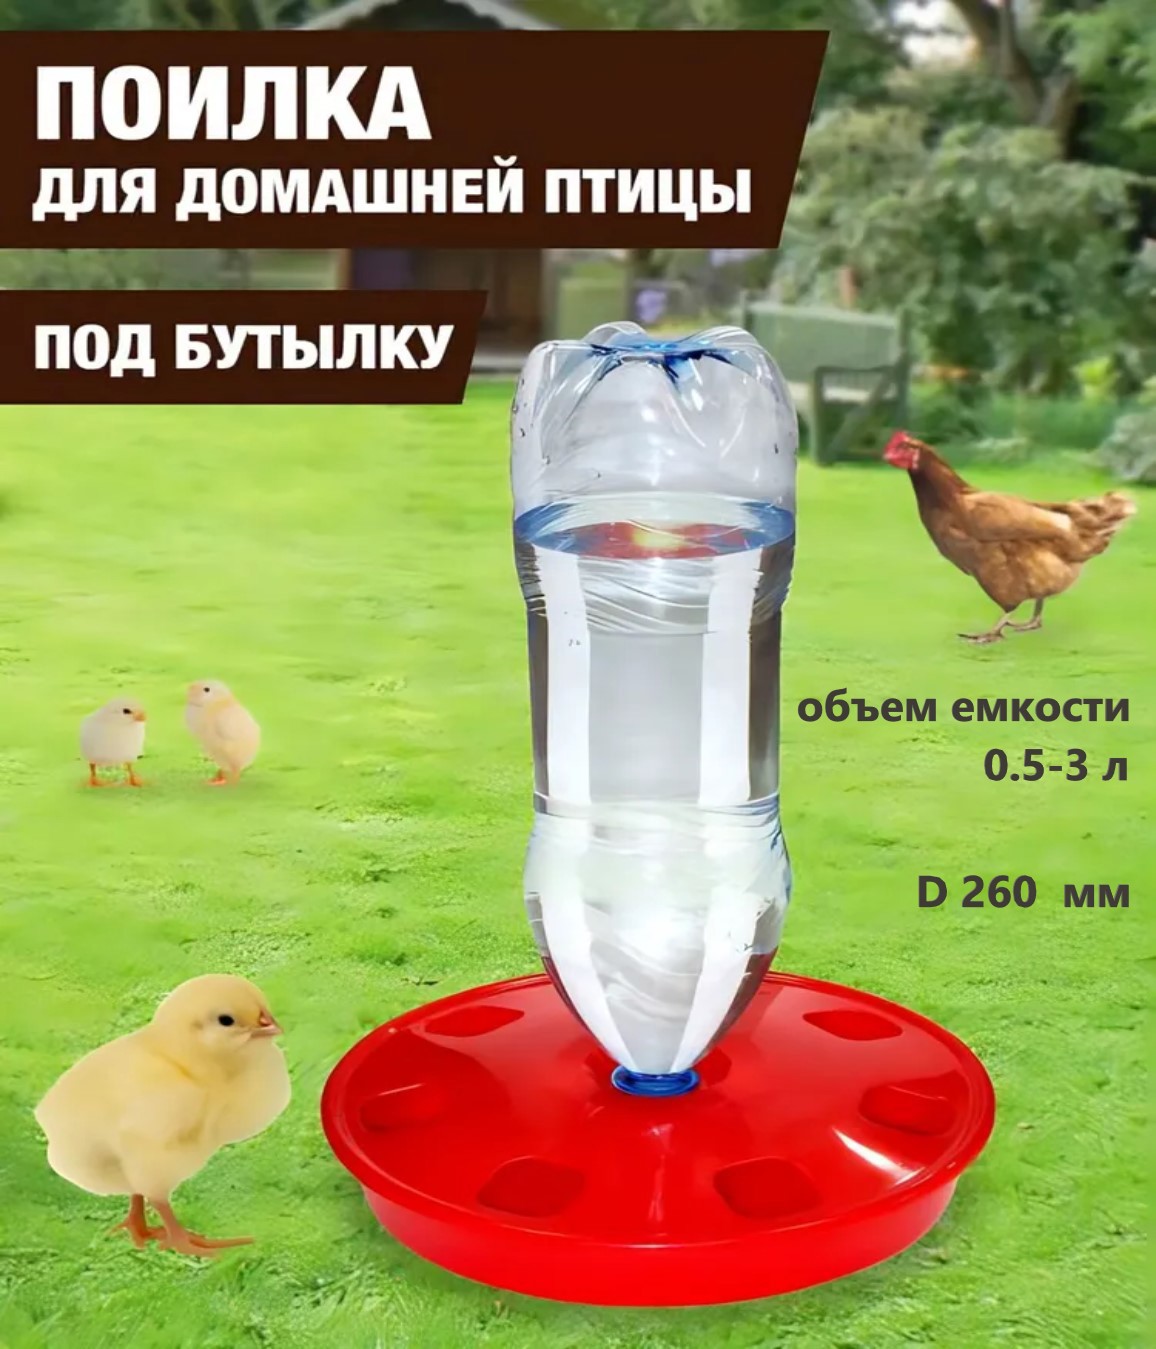 Кормушки для гусей и уток своими руками - картинки и фото luchistii-sudak.ru